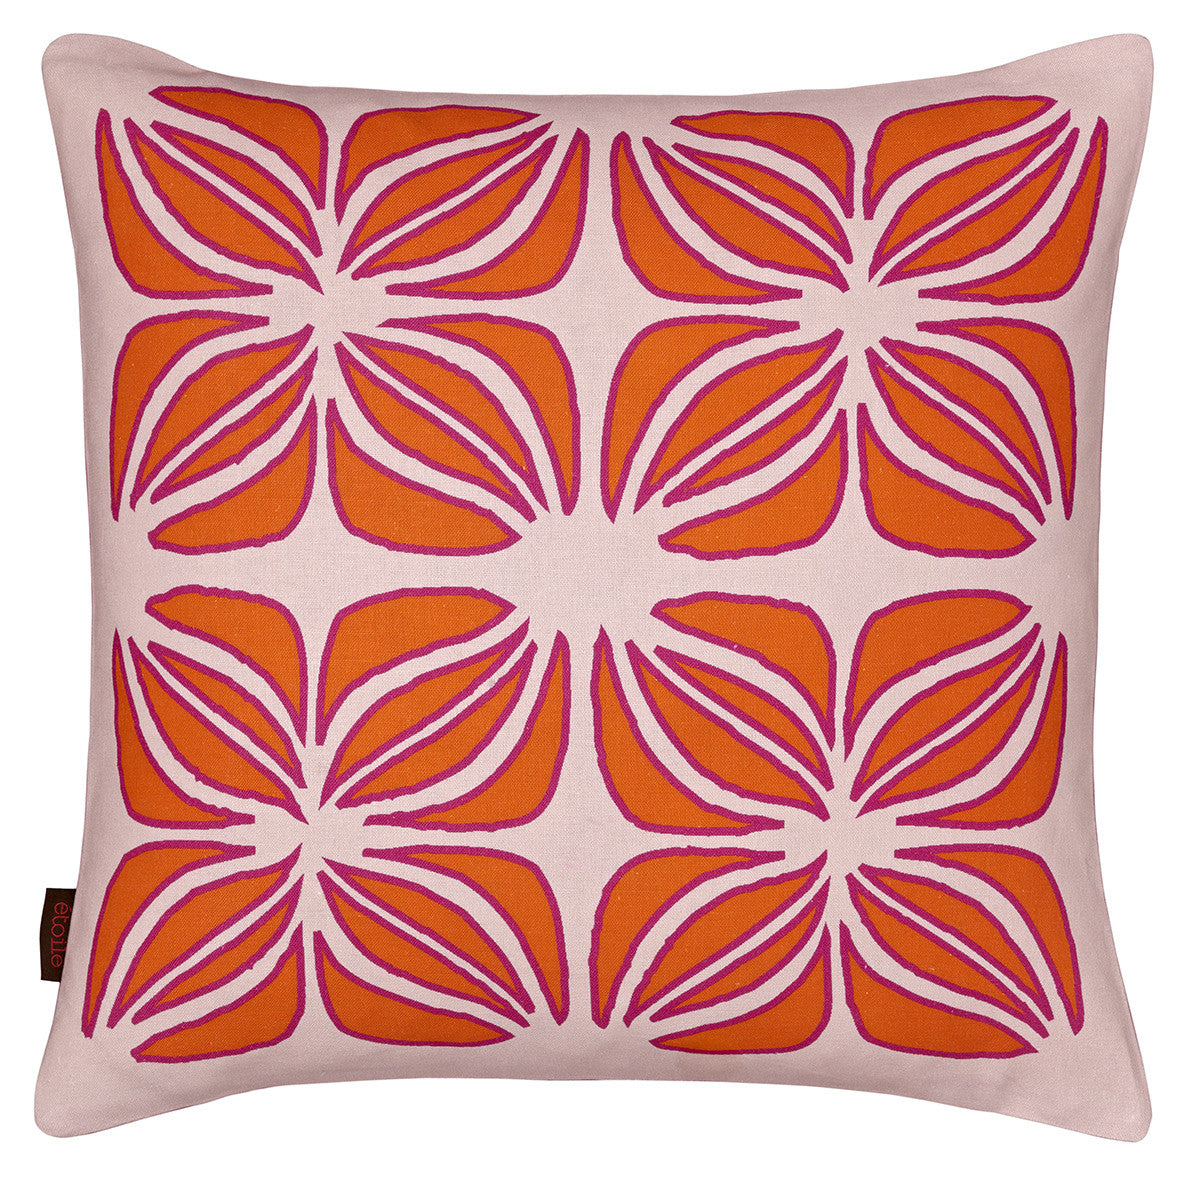 Nina Graphic Pattern Linen Cotton Cushion in Light Tea Rose Pink with Orange